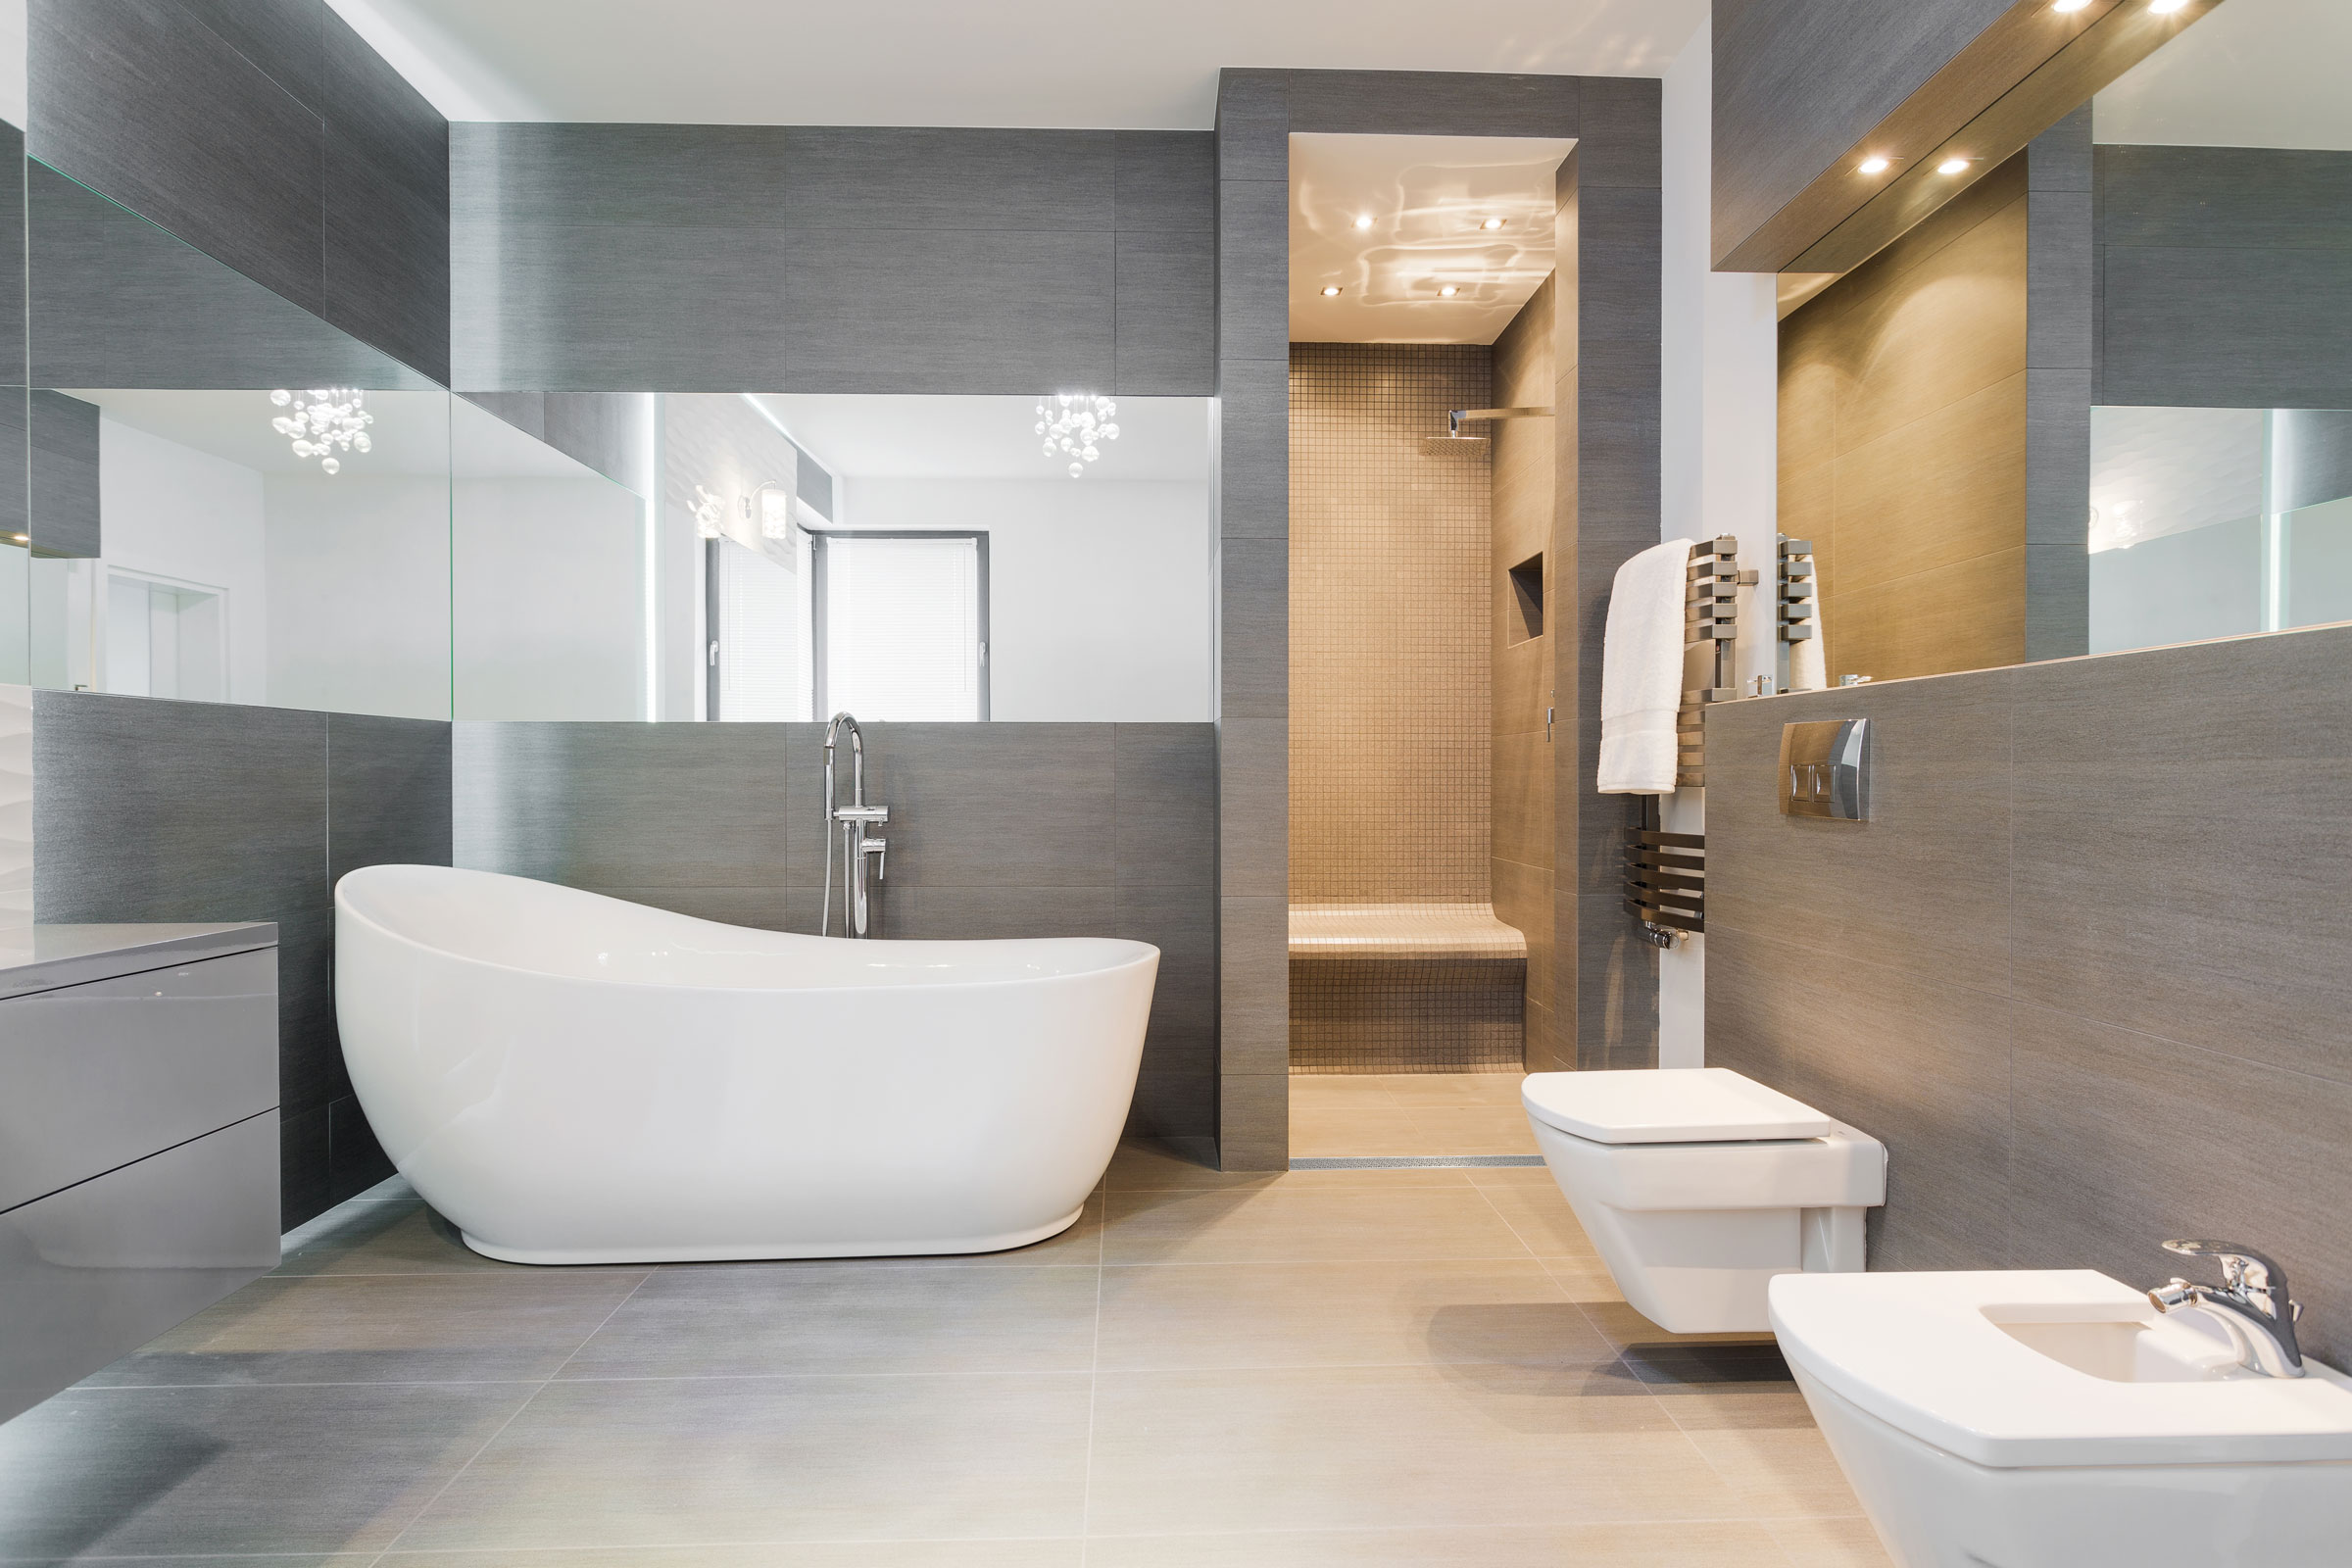 Designing for Inclusive Luxury in Bathrooms